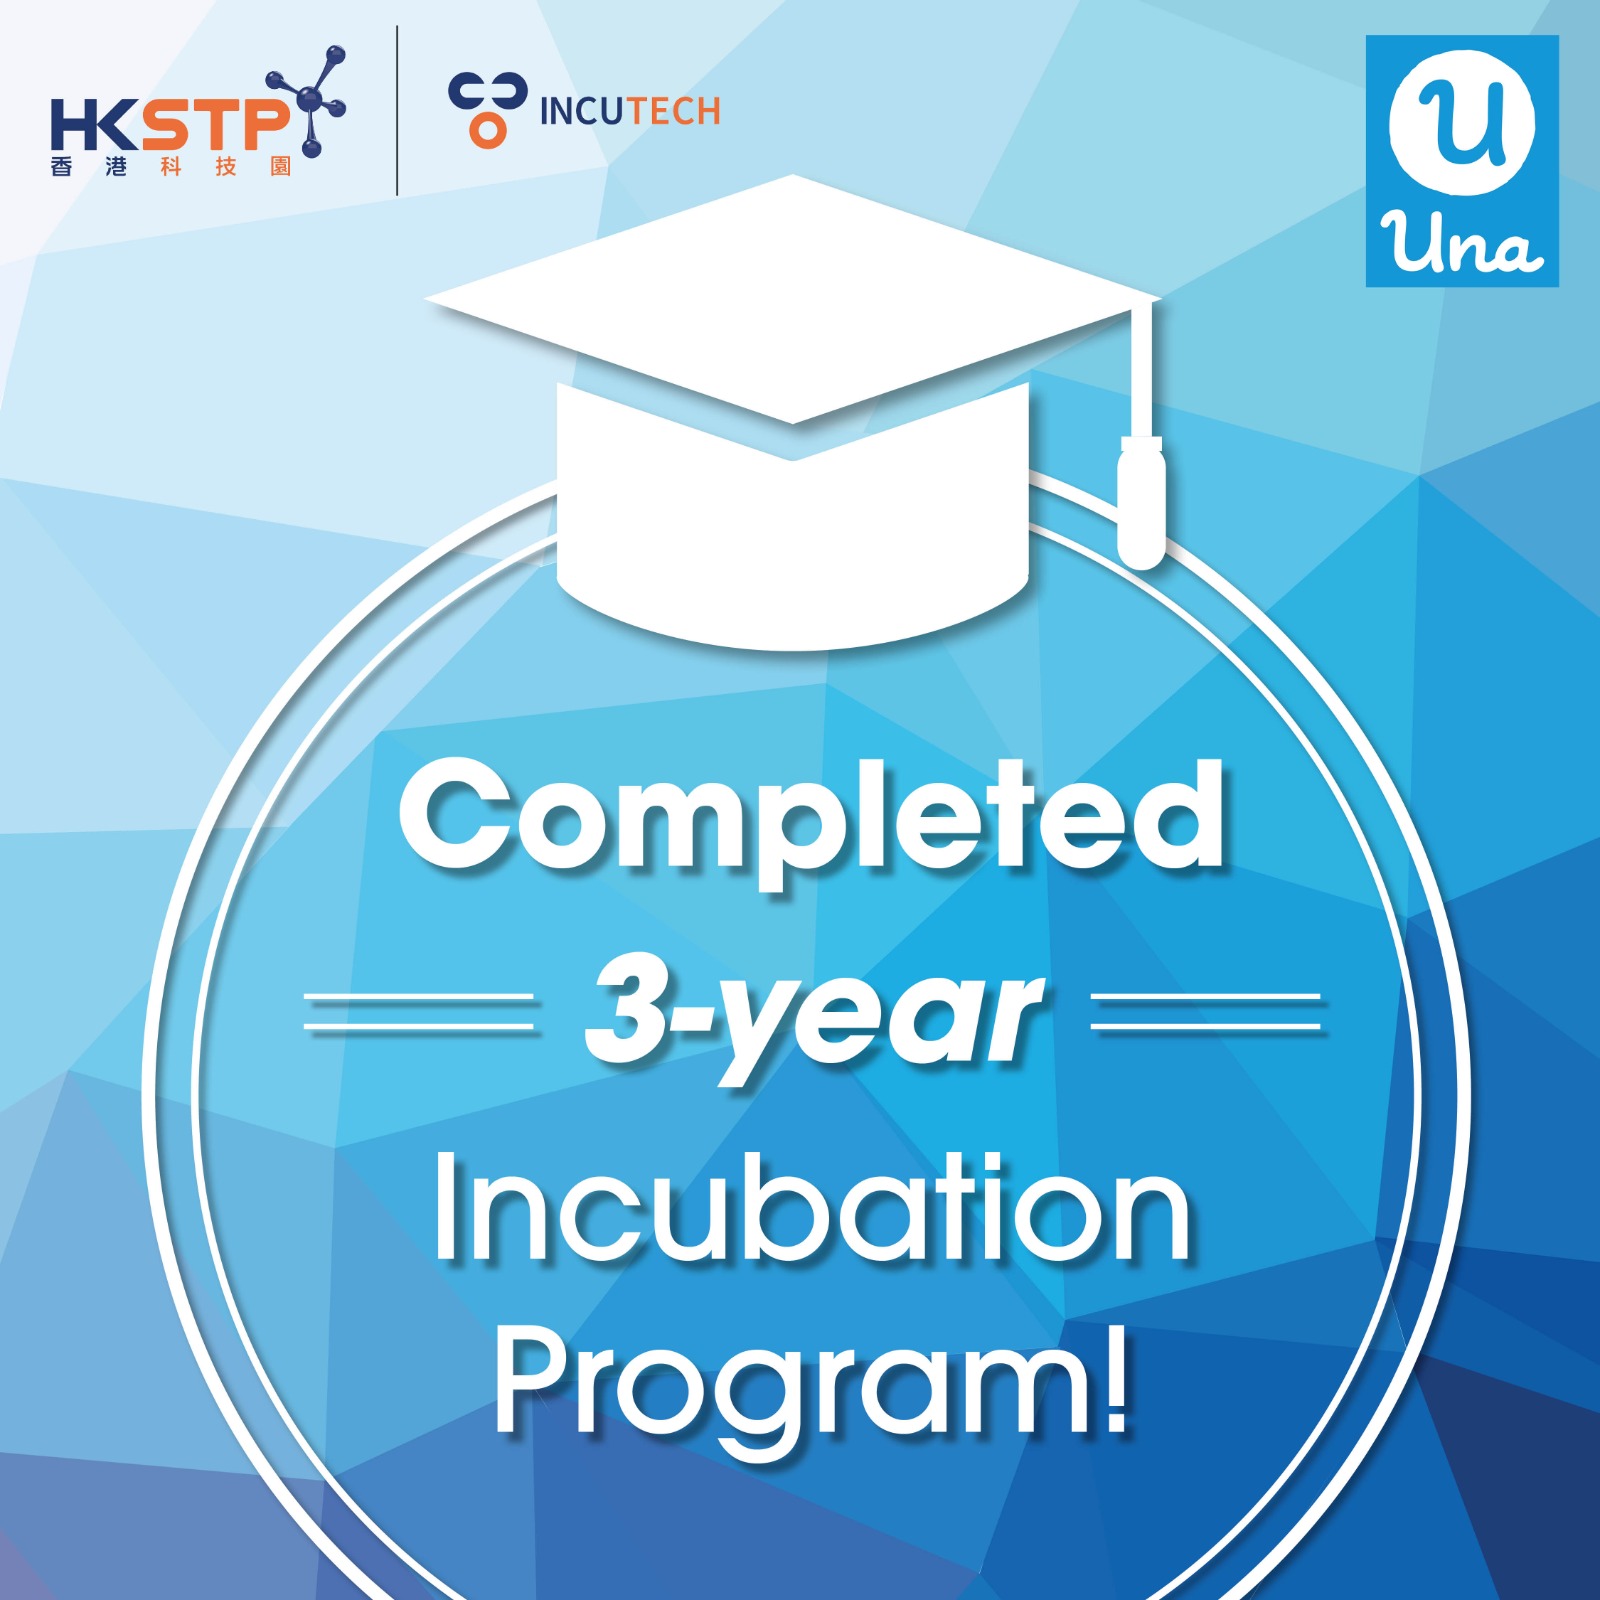 Una Milestone: Completed HKSTP’s Incubation Program